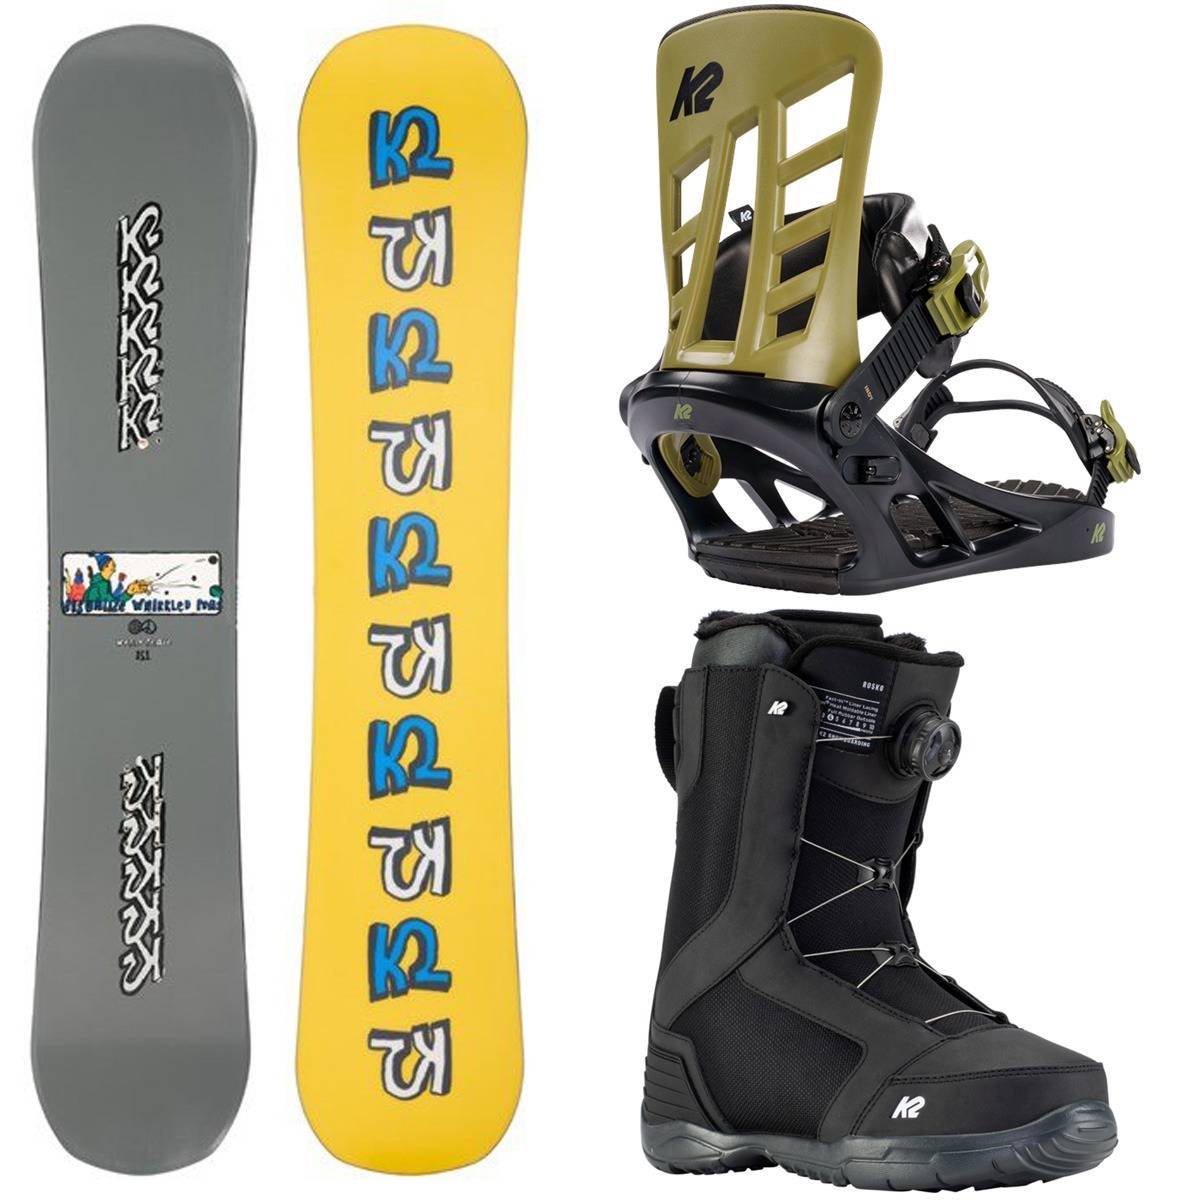 K2 snowboard package